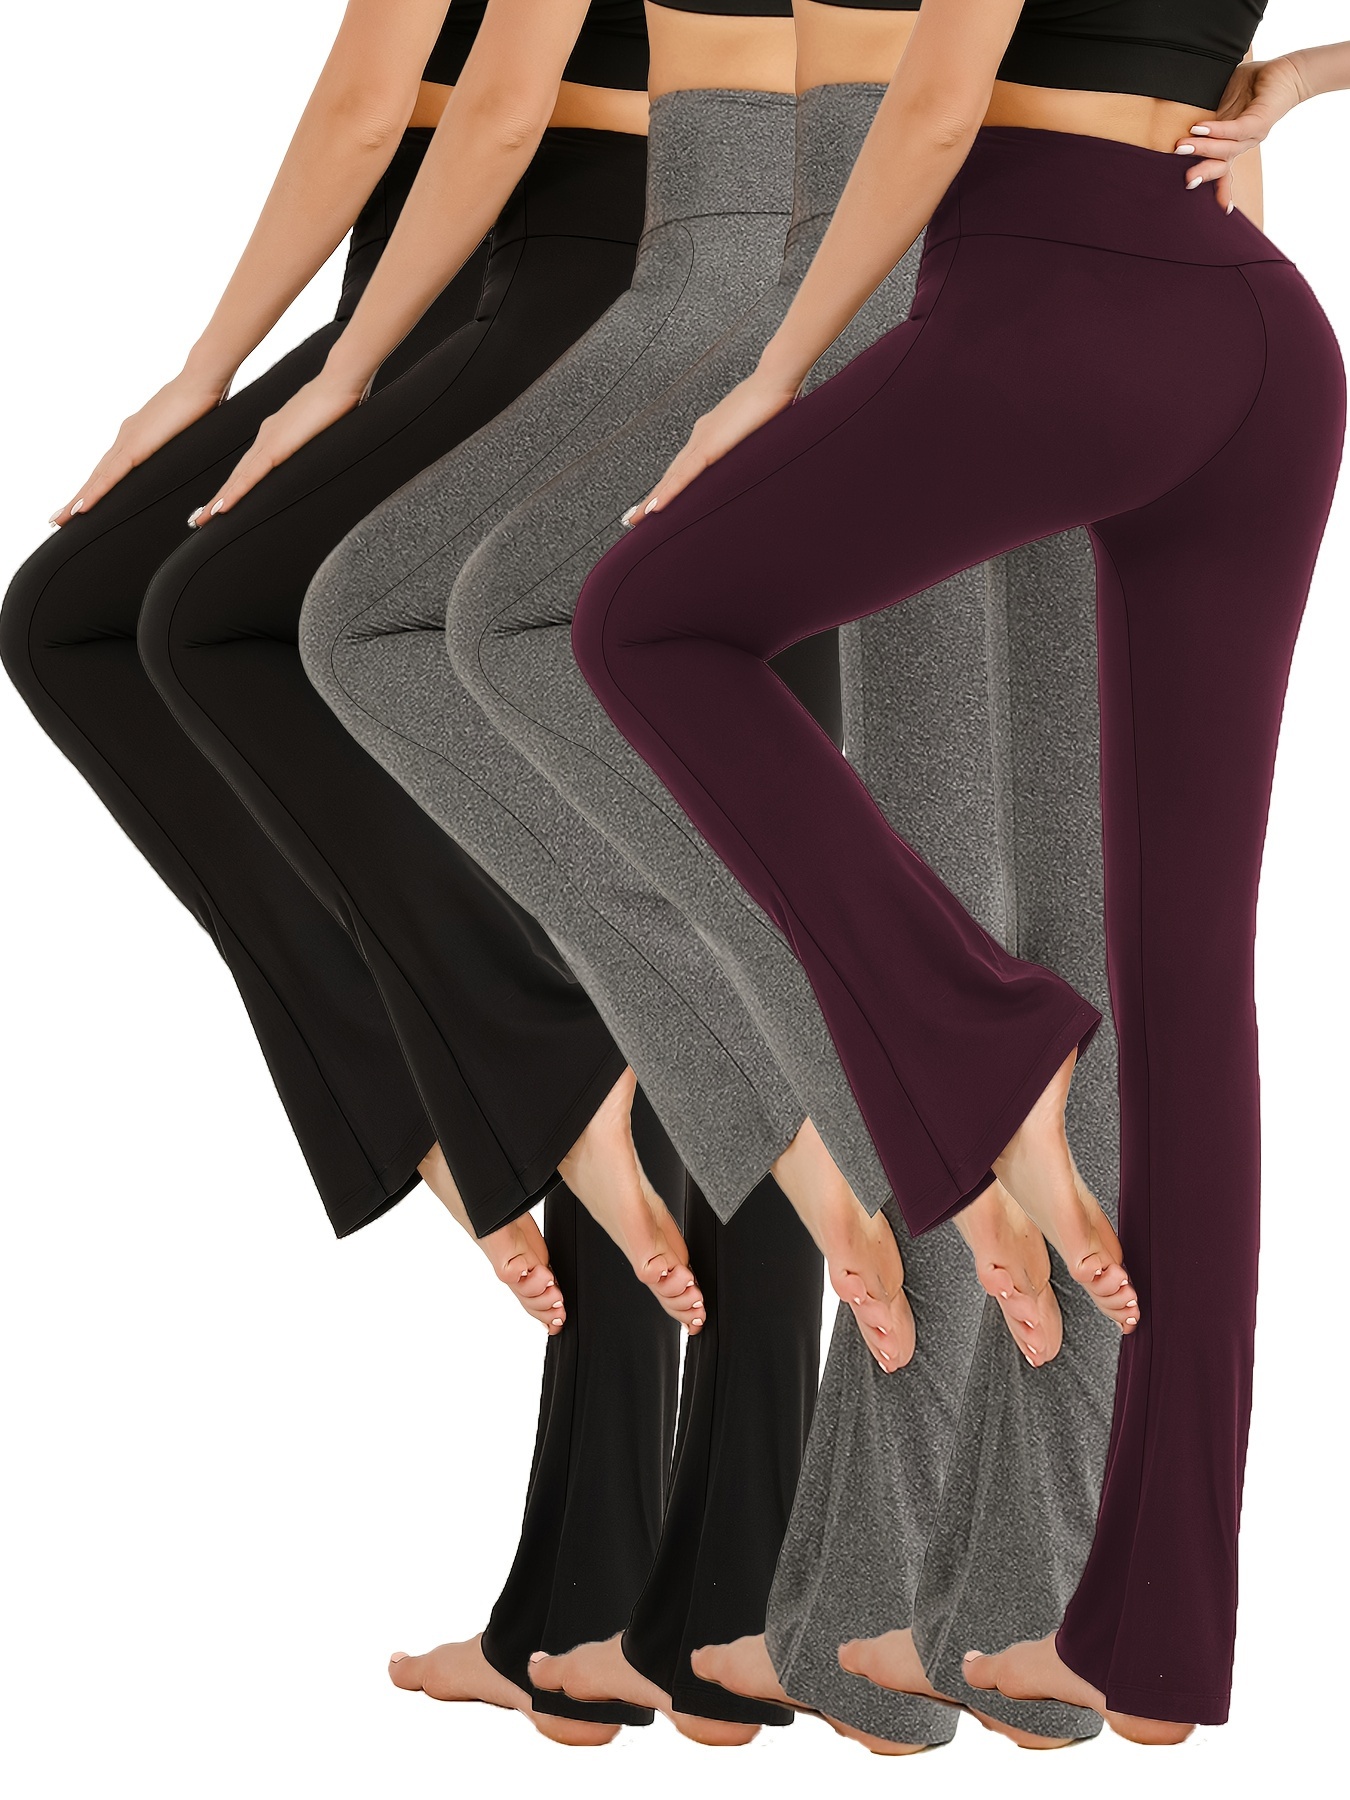  Capri Flare Leggings For Women - High Waist Tummy Control  Bootcut Yoga Pants Workout Flare Capris Pants Crimson